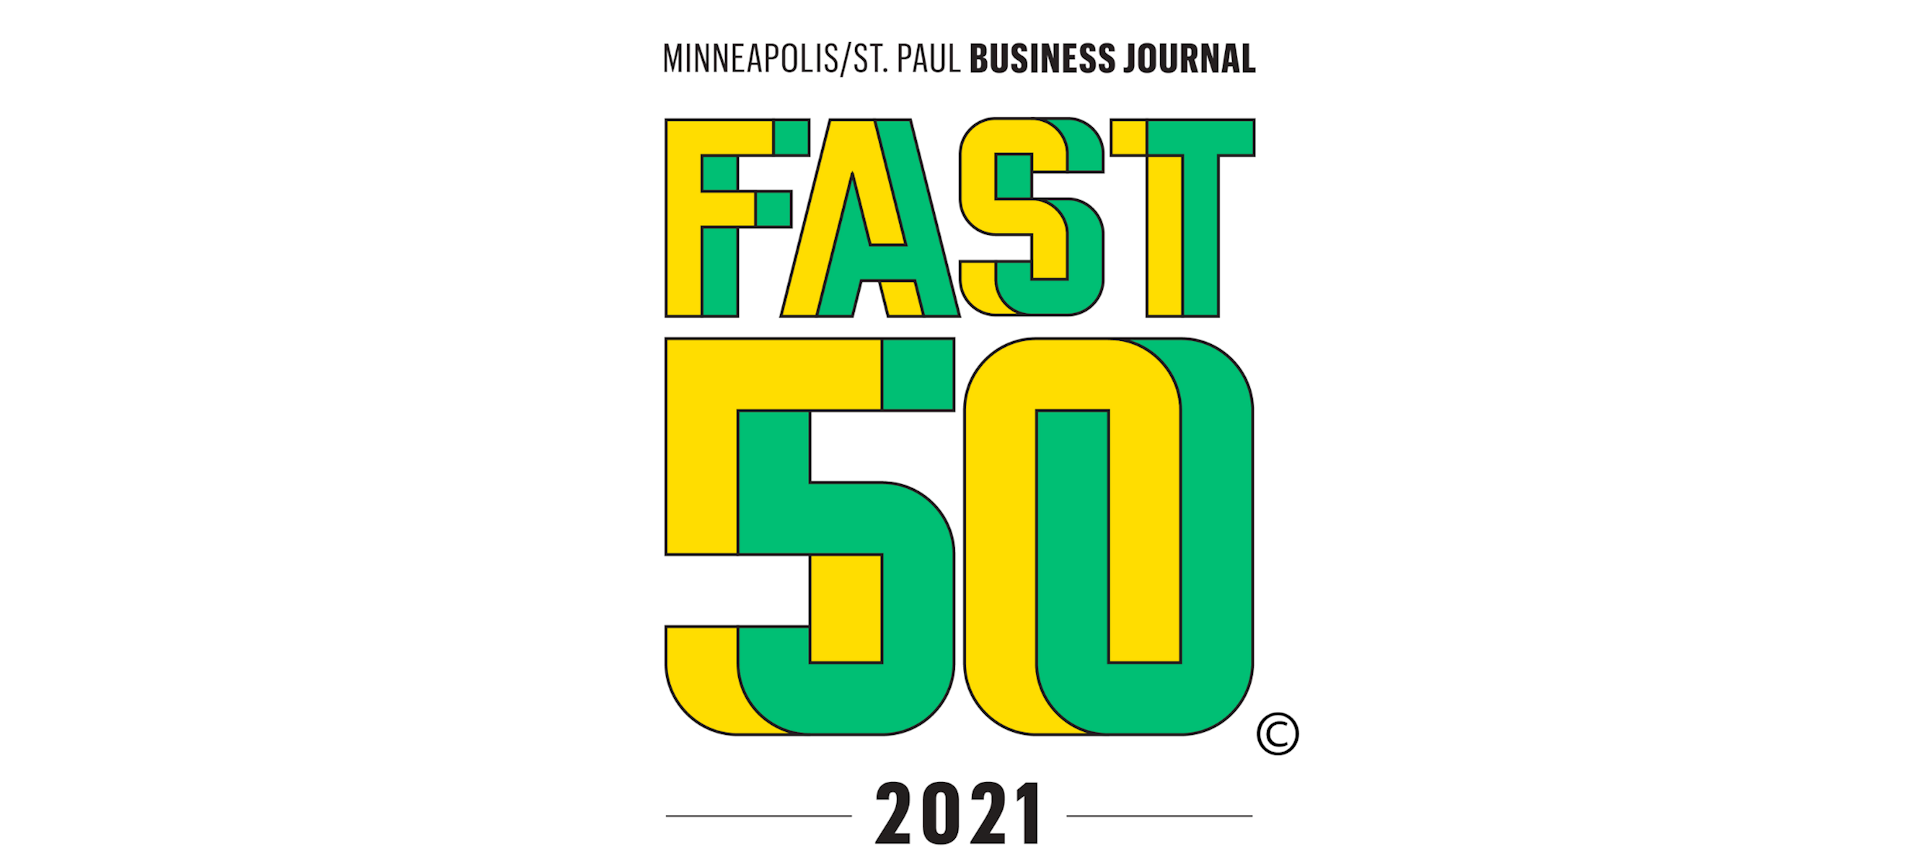 Minneapolis/St. Paul Business Journal Fast 50 2021